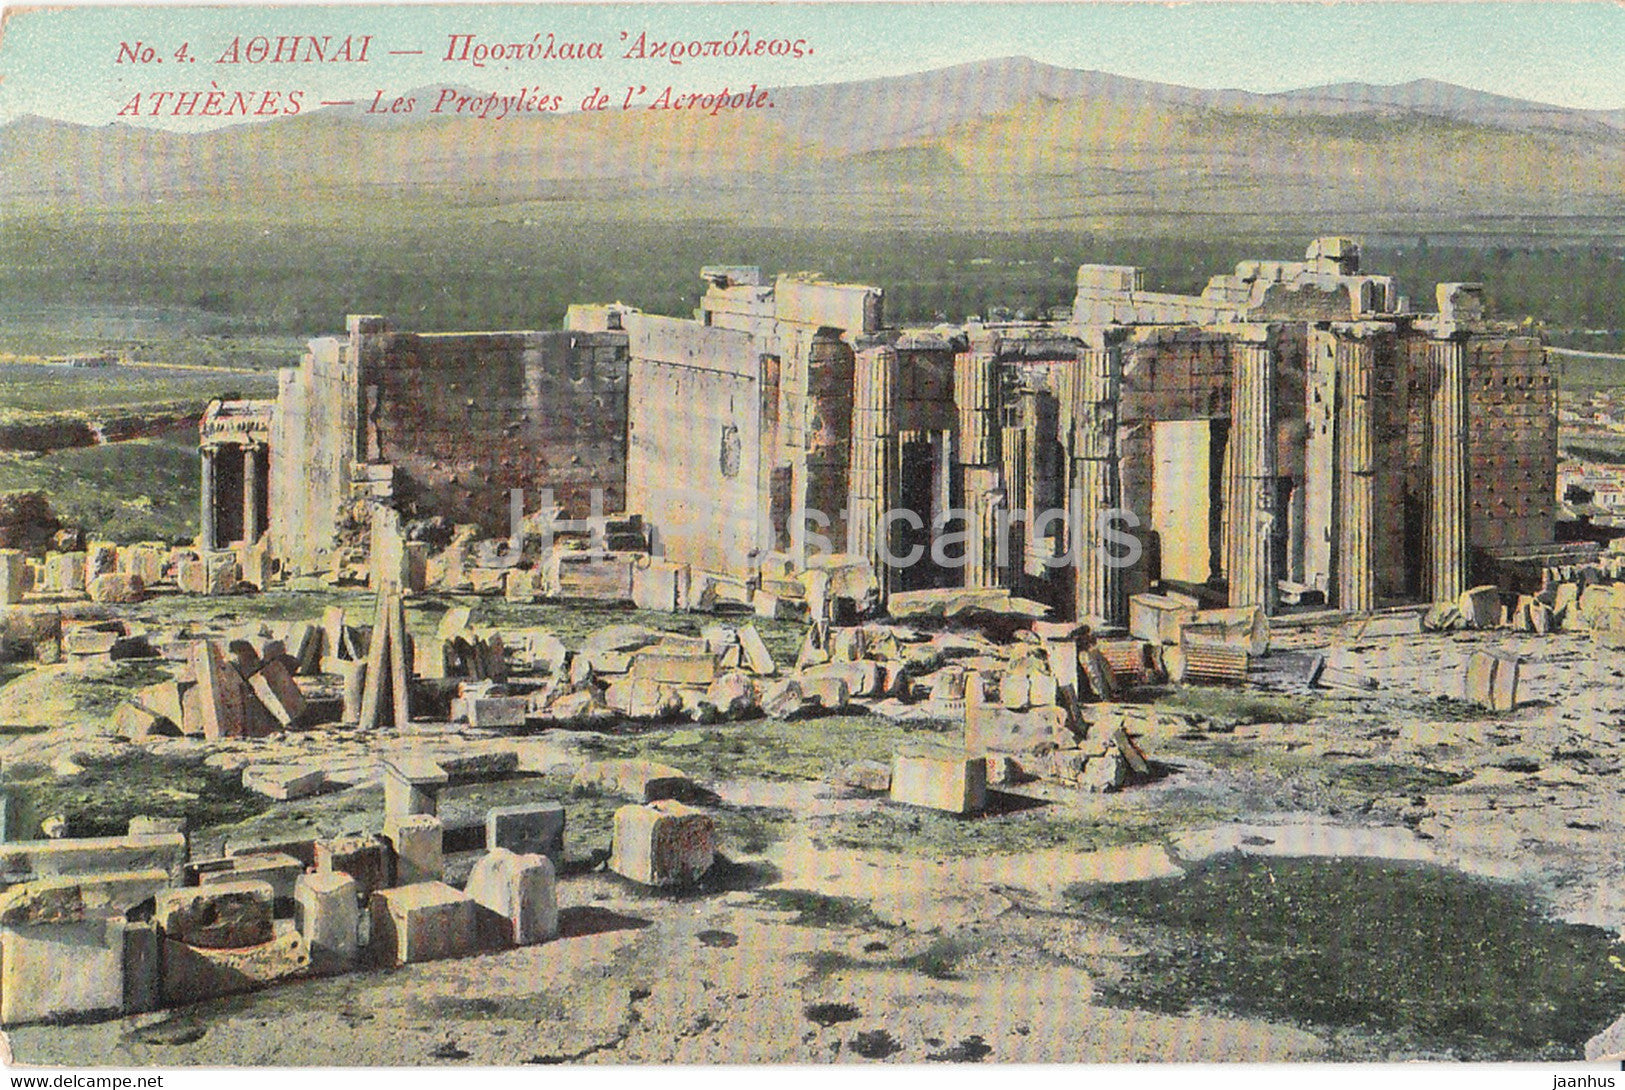 Athens - Athenes - Les Propylees de l'Acropole - ancient ruines - old postcard - 1911 - Greece - used - JH Postcards